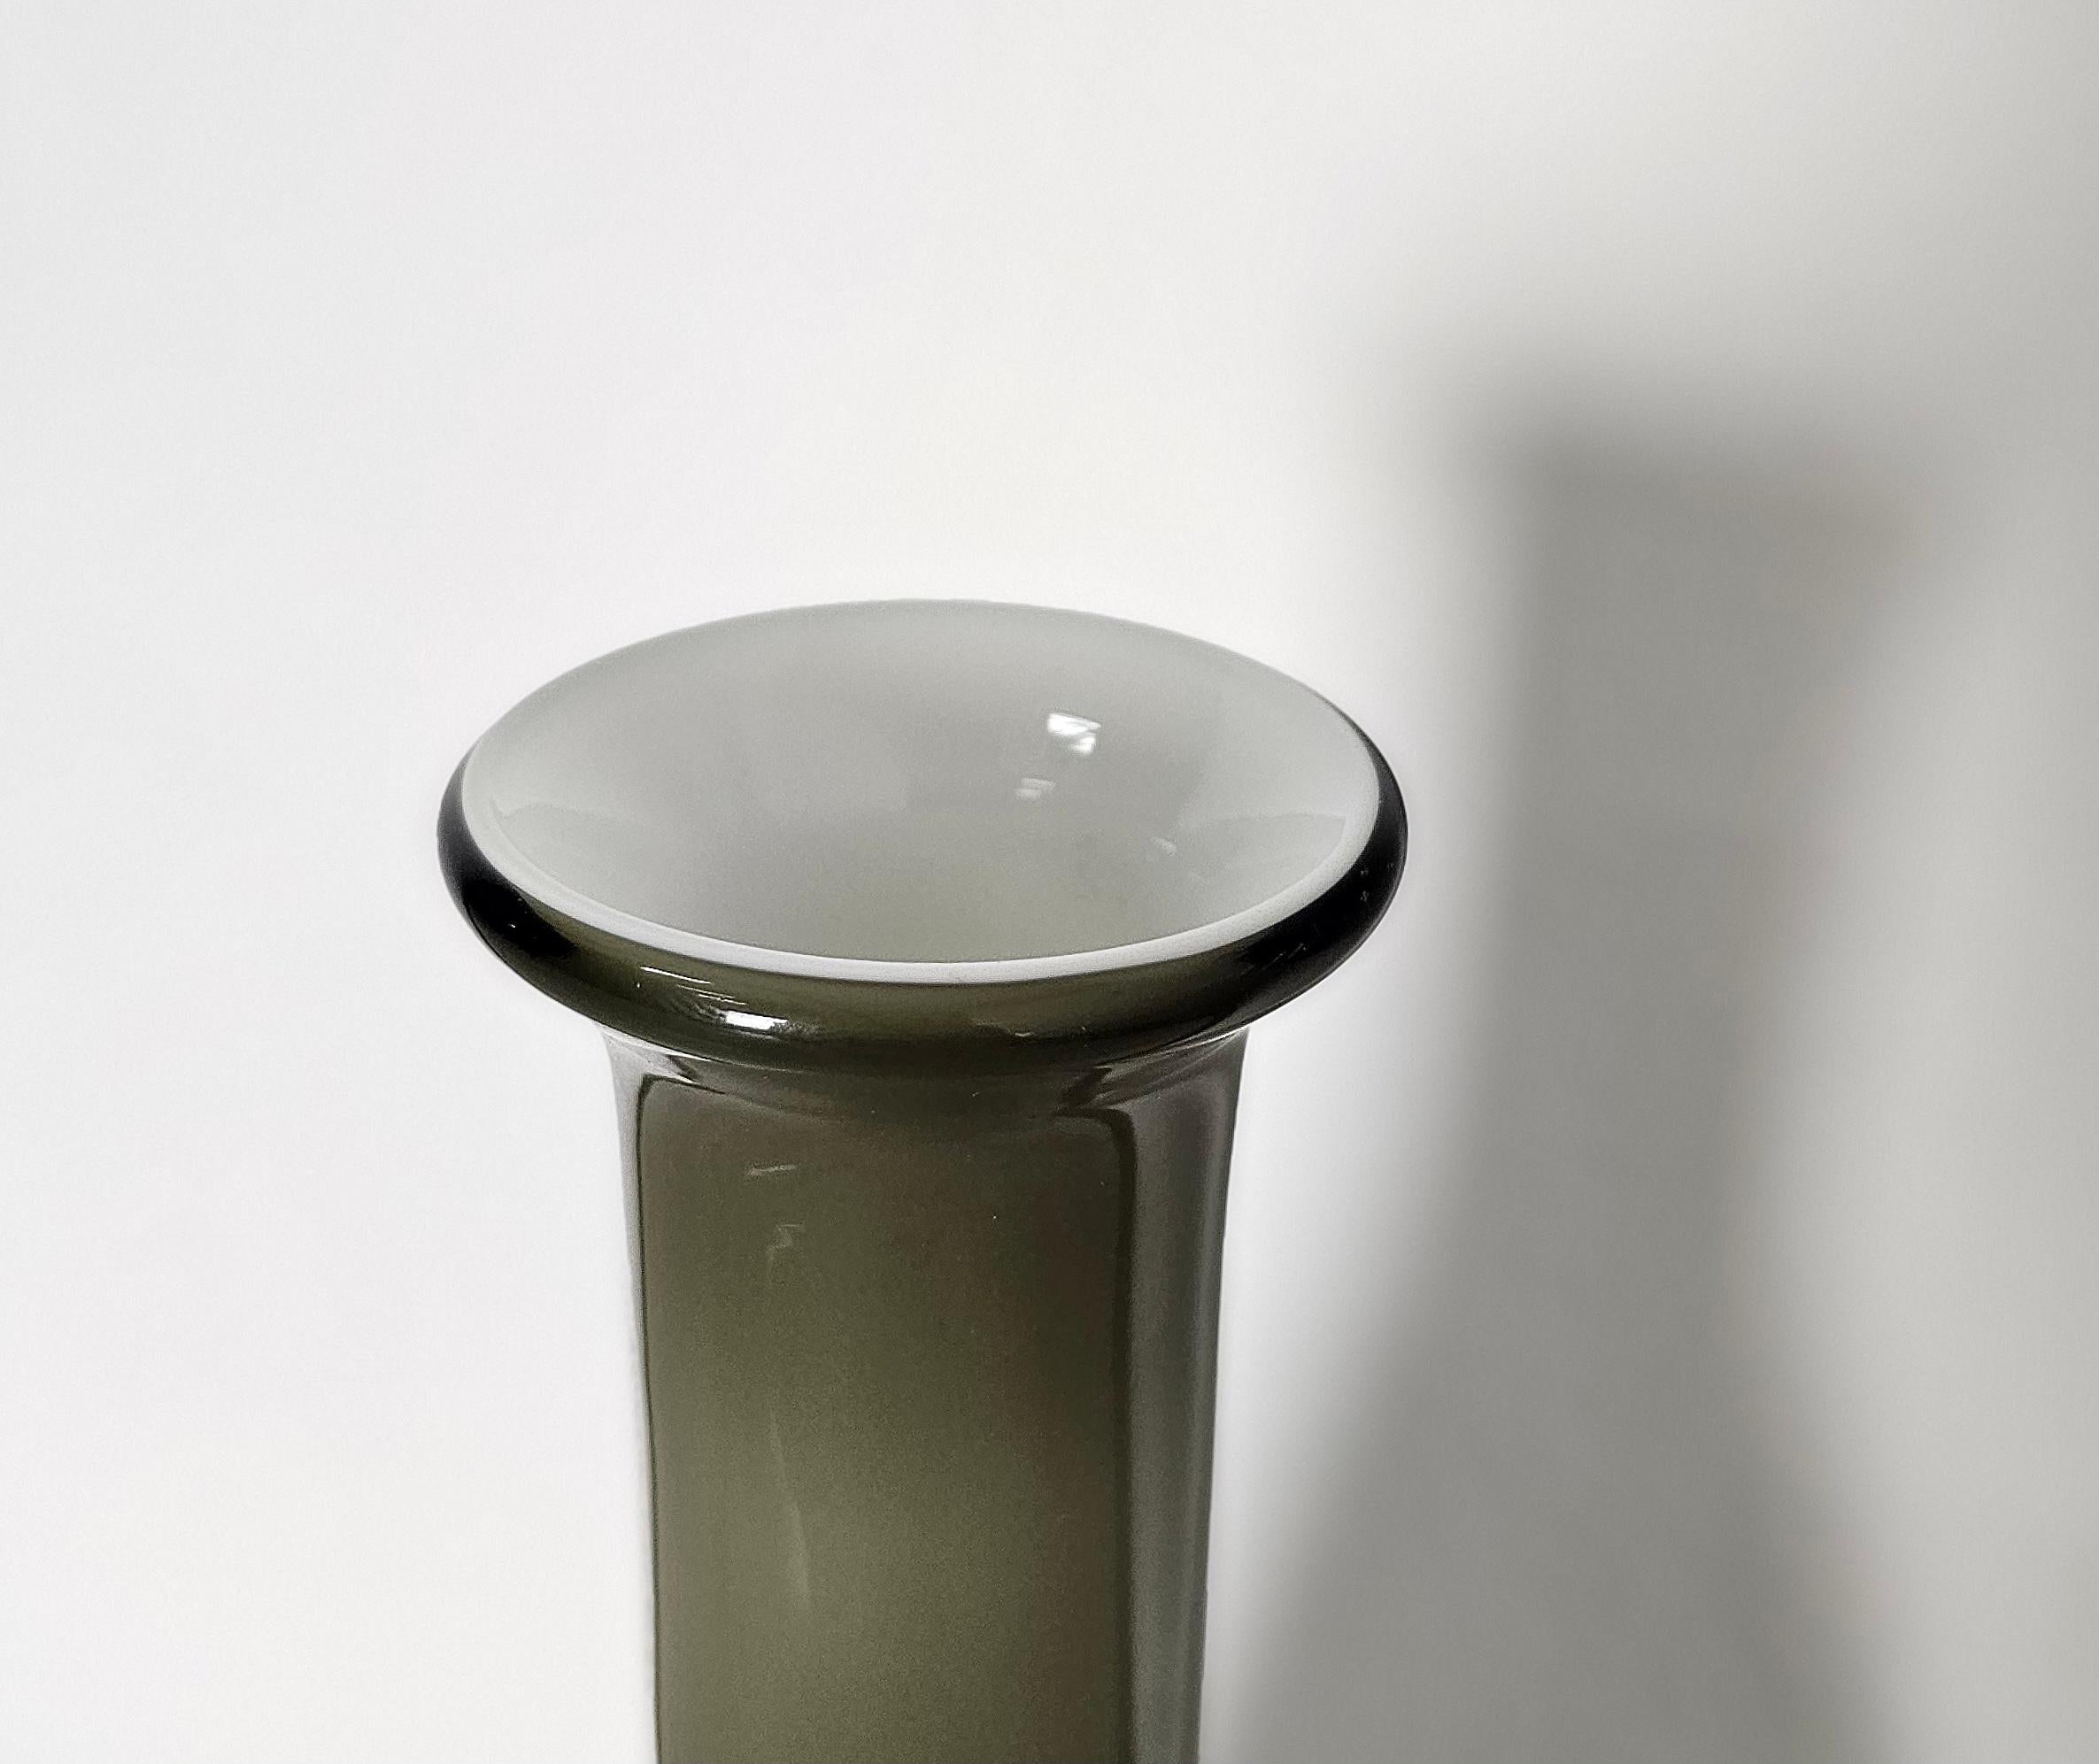 Vase Decorative Object Murano Glass Green Midcentury Modern Italian Design 1960s For Sale 1